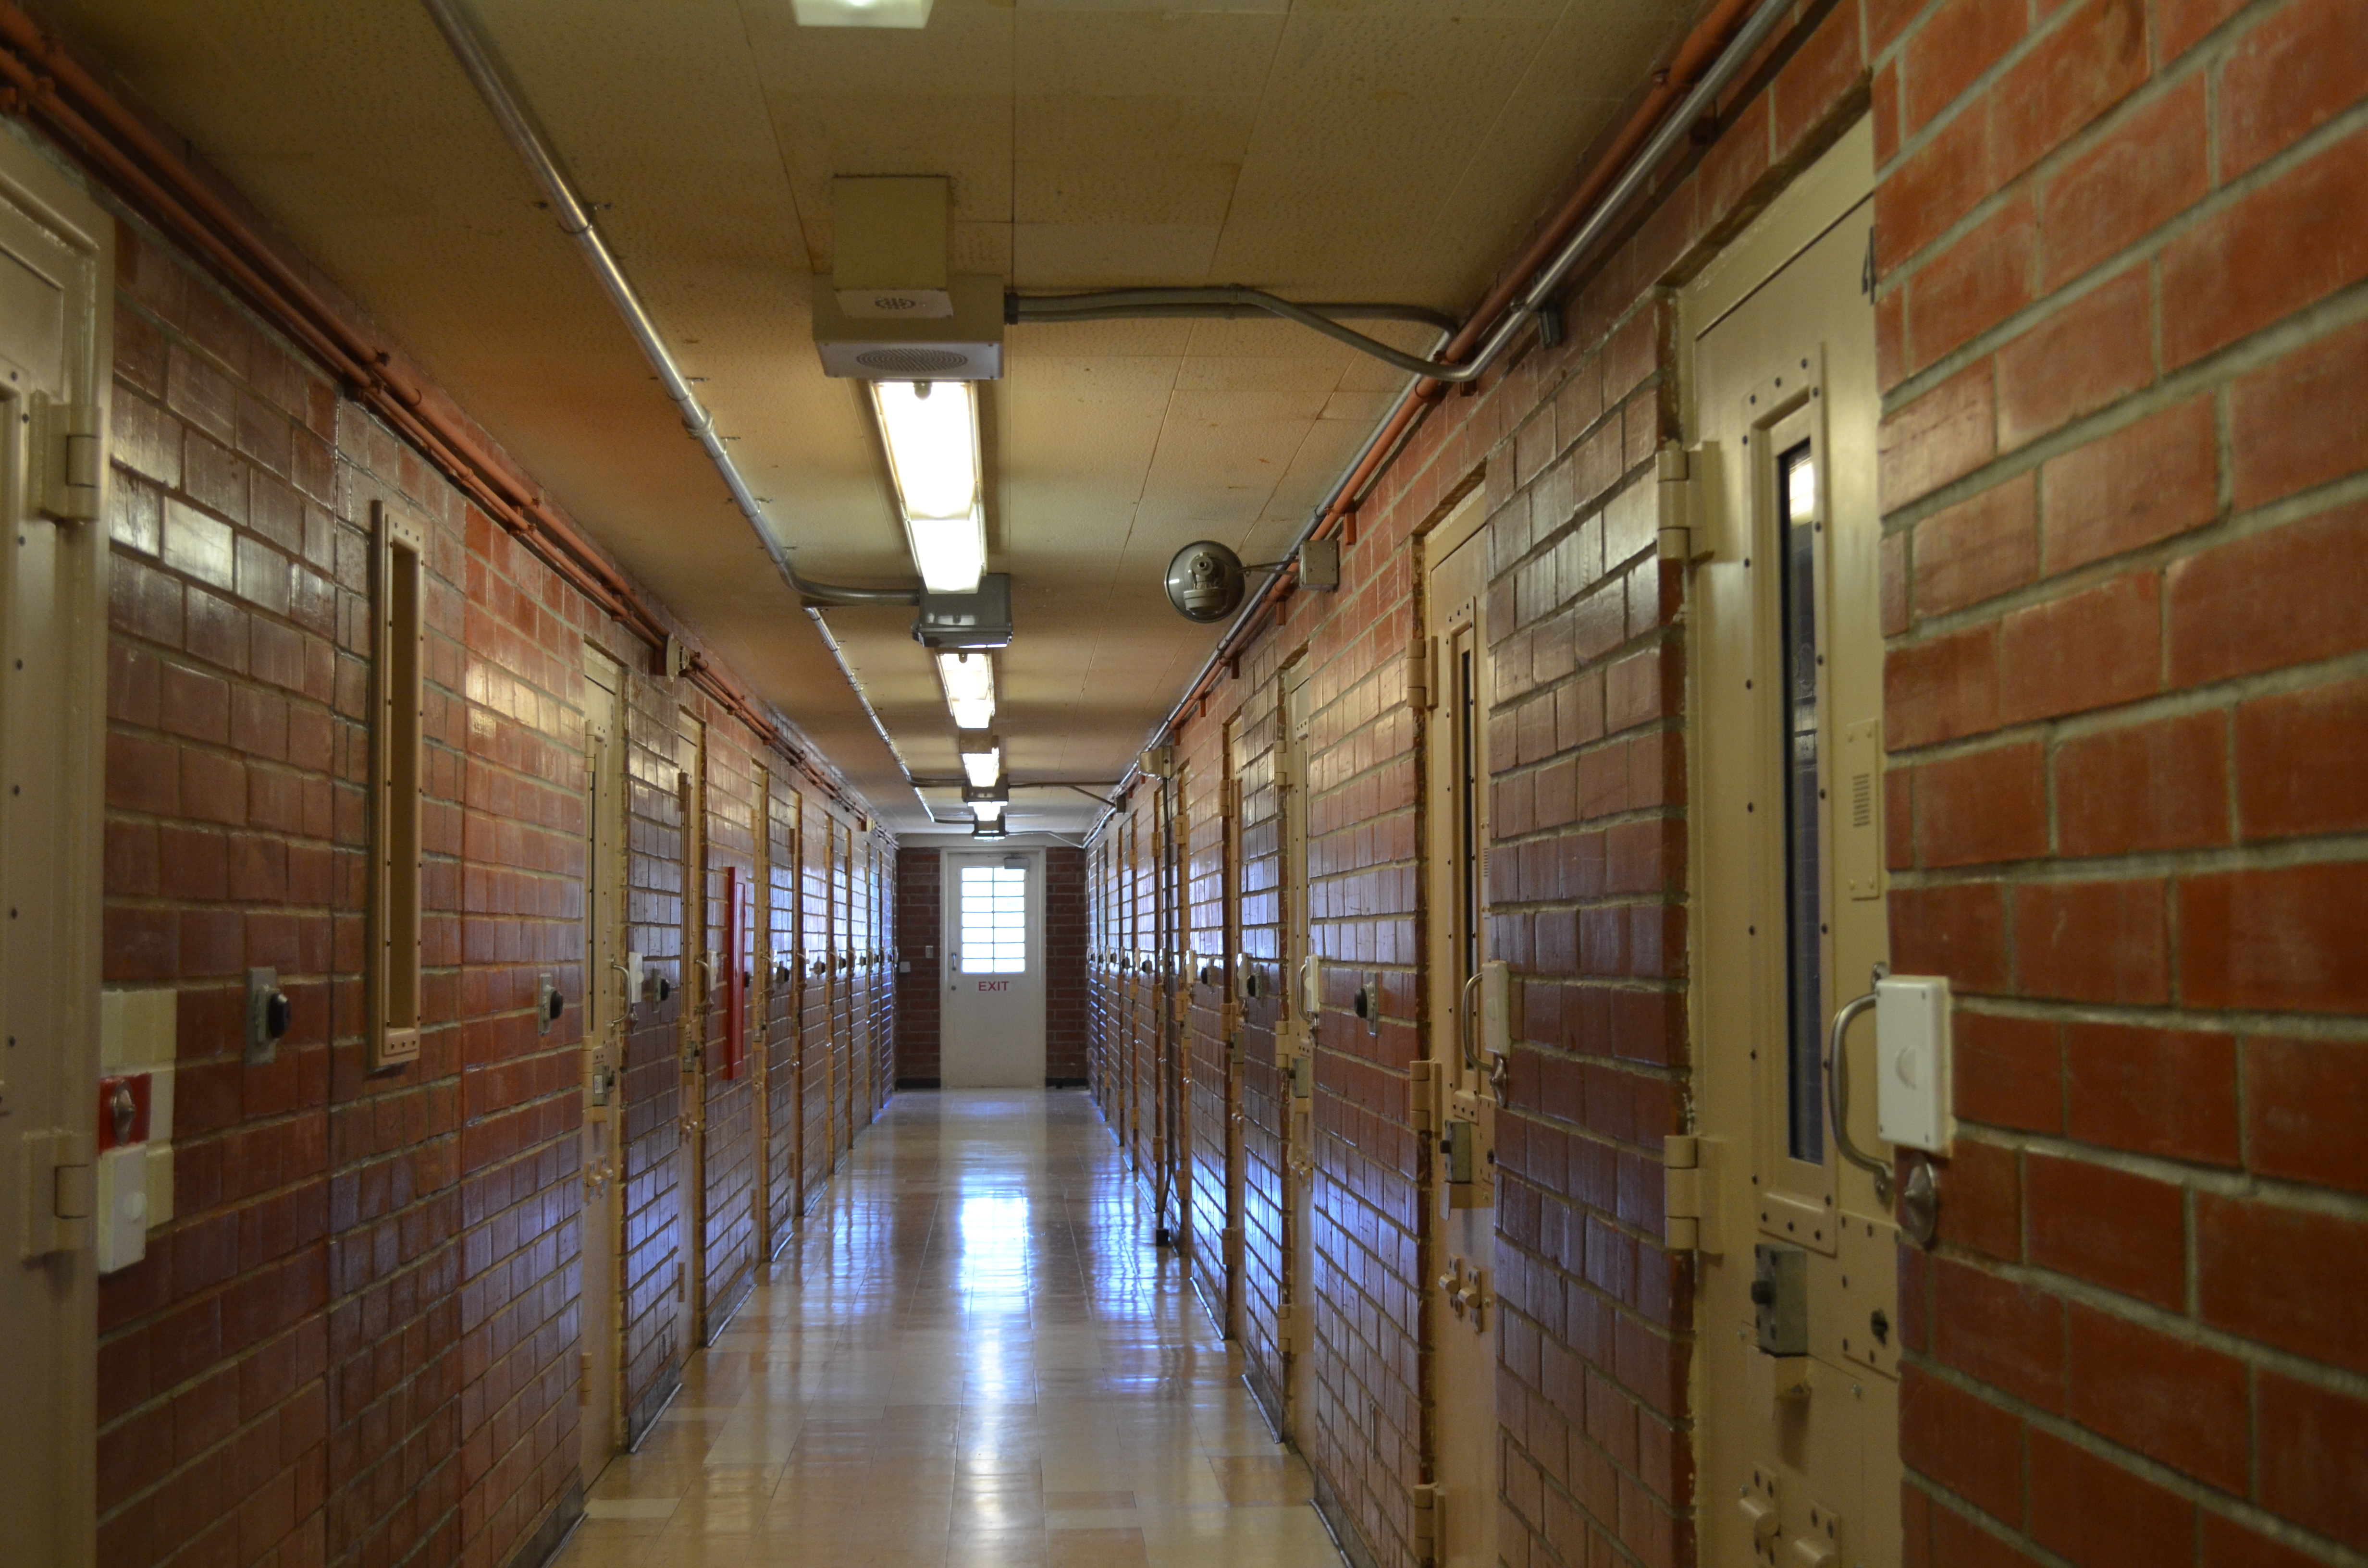 CJCJ | Hallway in a living unit at DJJ facility